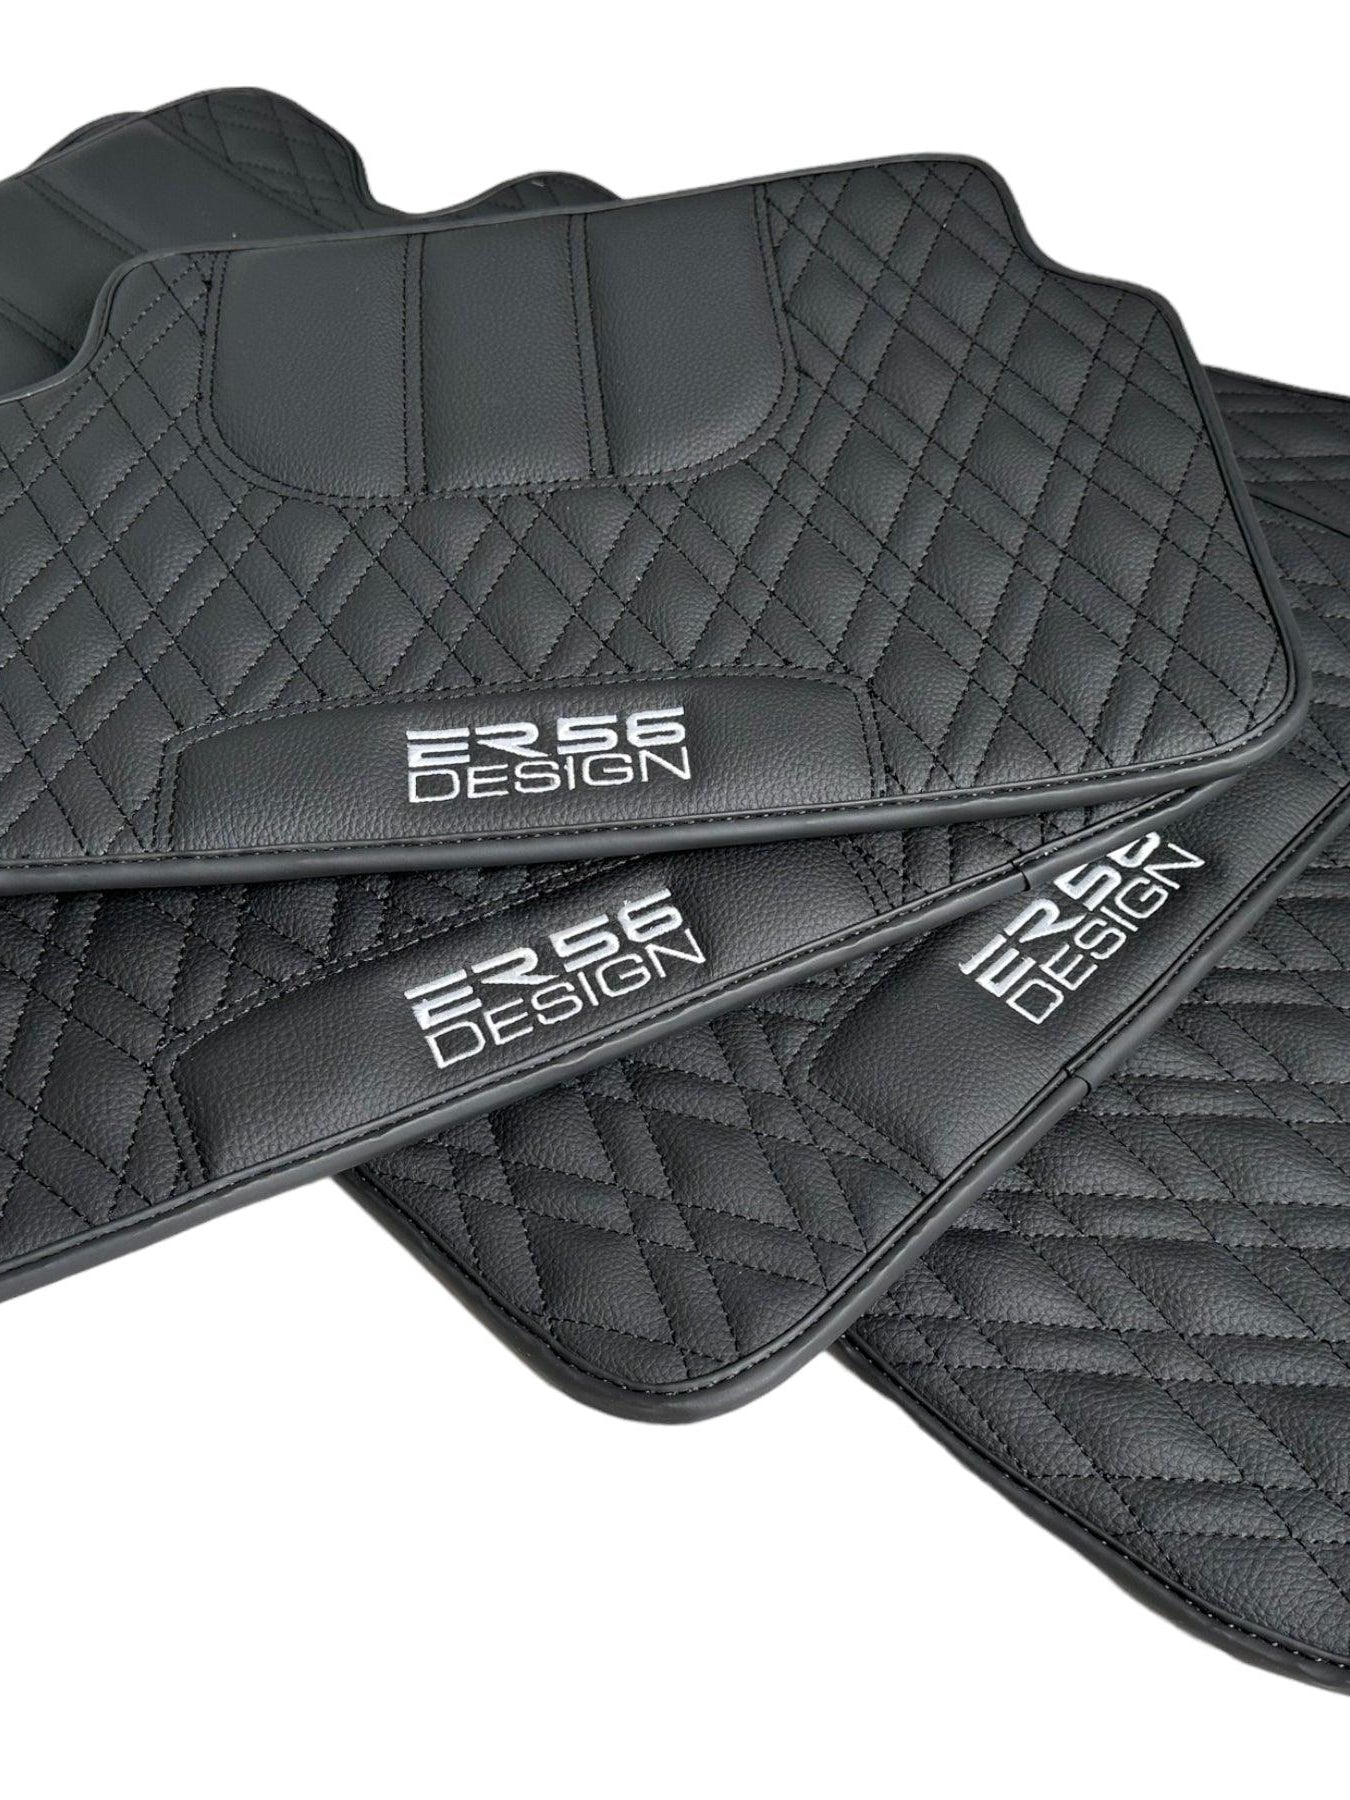 Black Leather Floor Mats For BMW 1 Series F20 Er56 Design - AutoWin